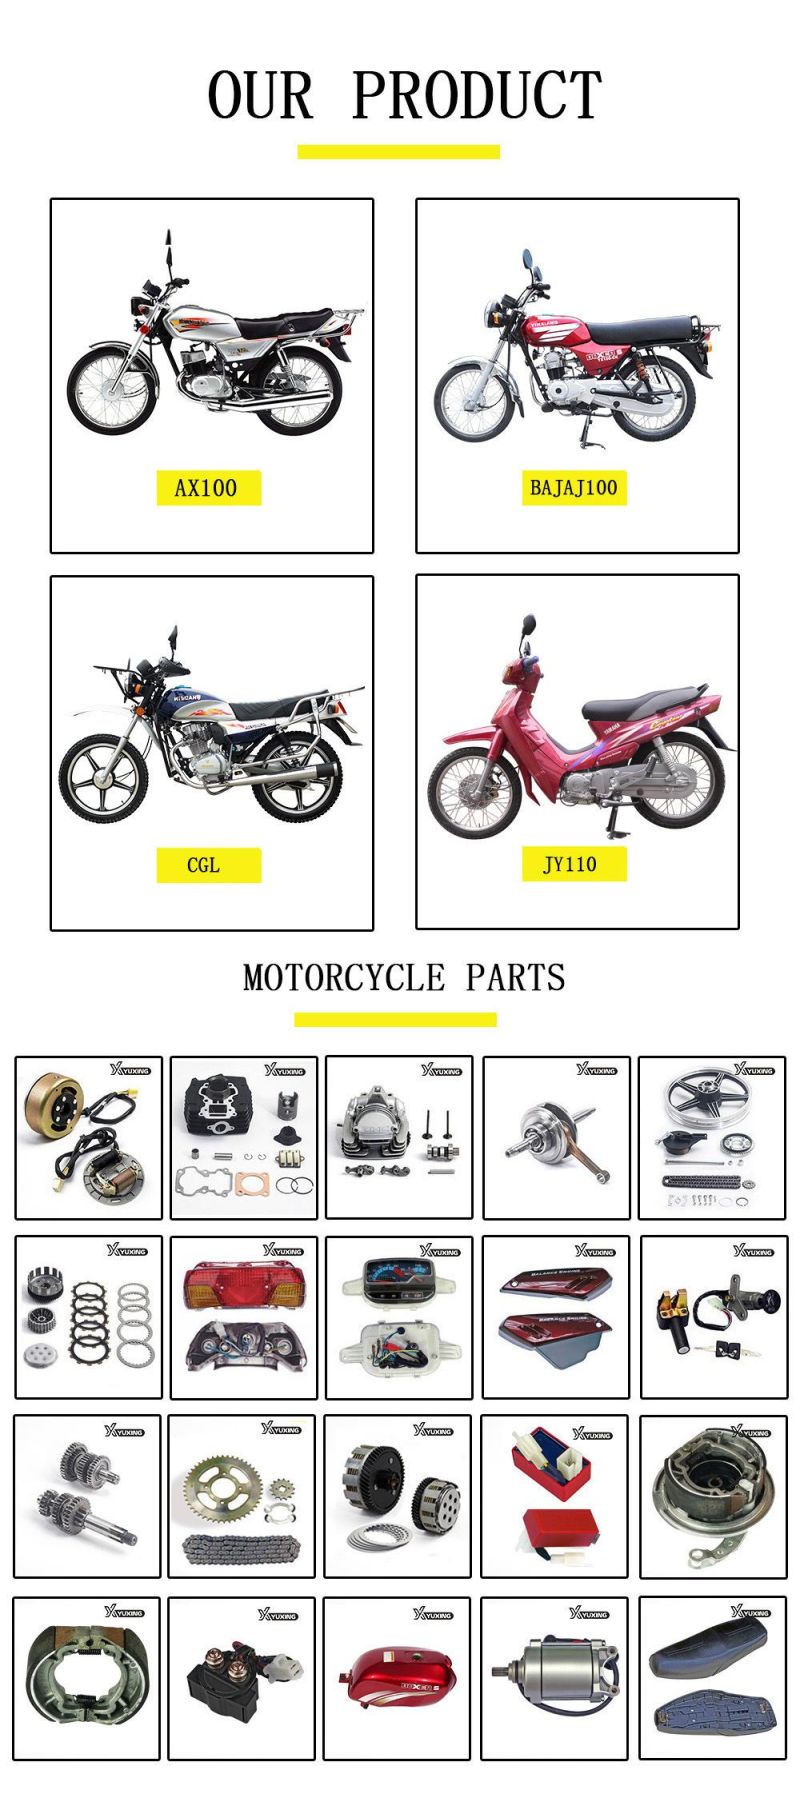 Cgl Motorcycle Parts Motorcycle Air Filter